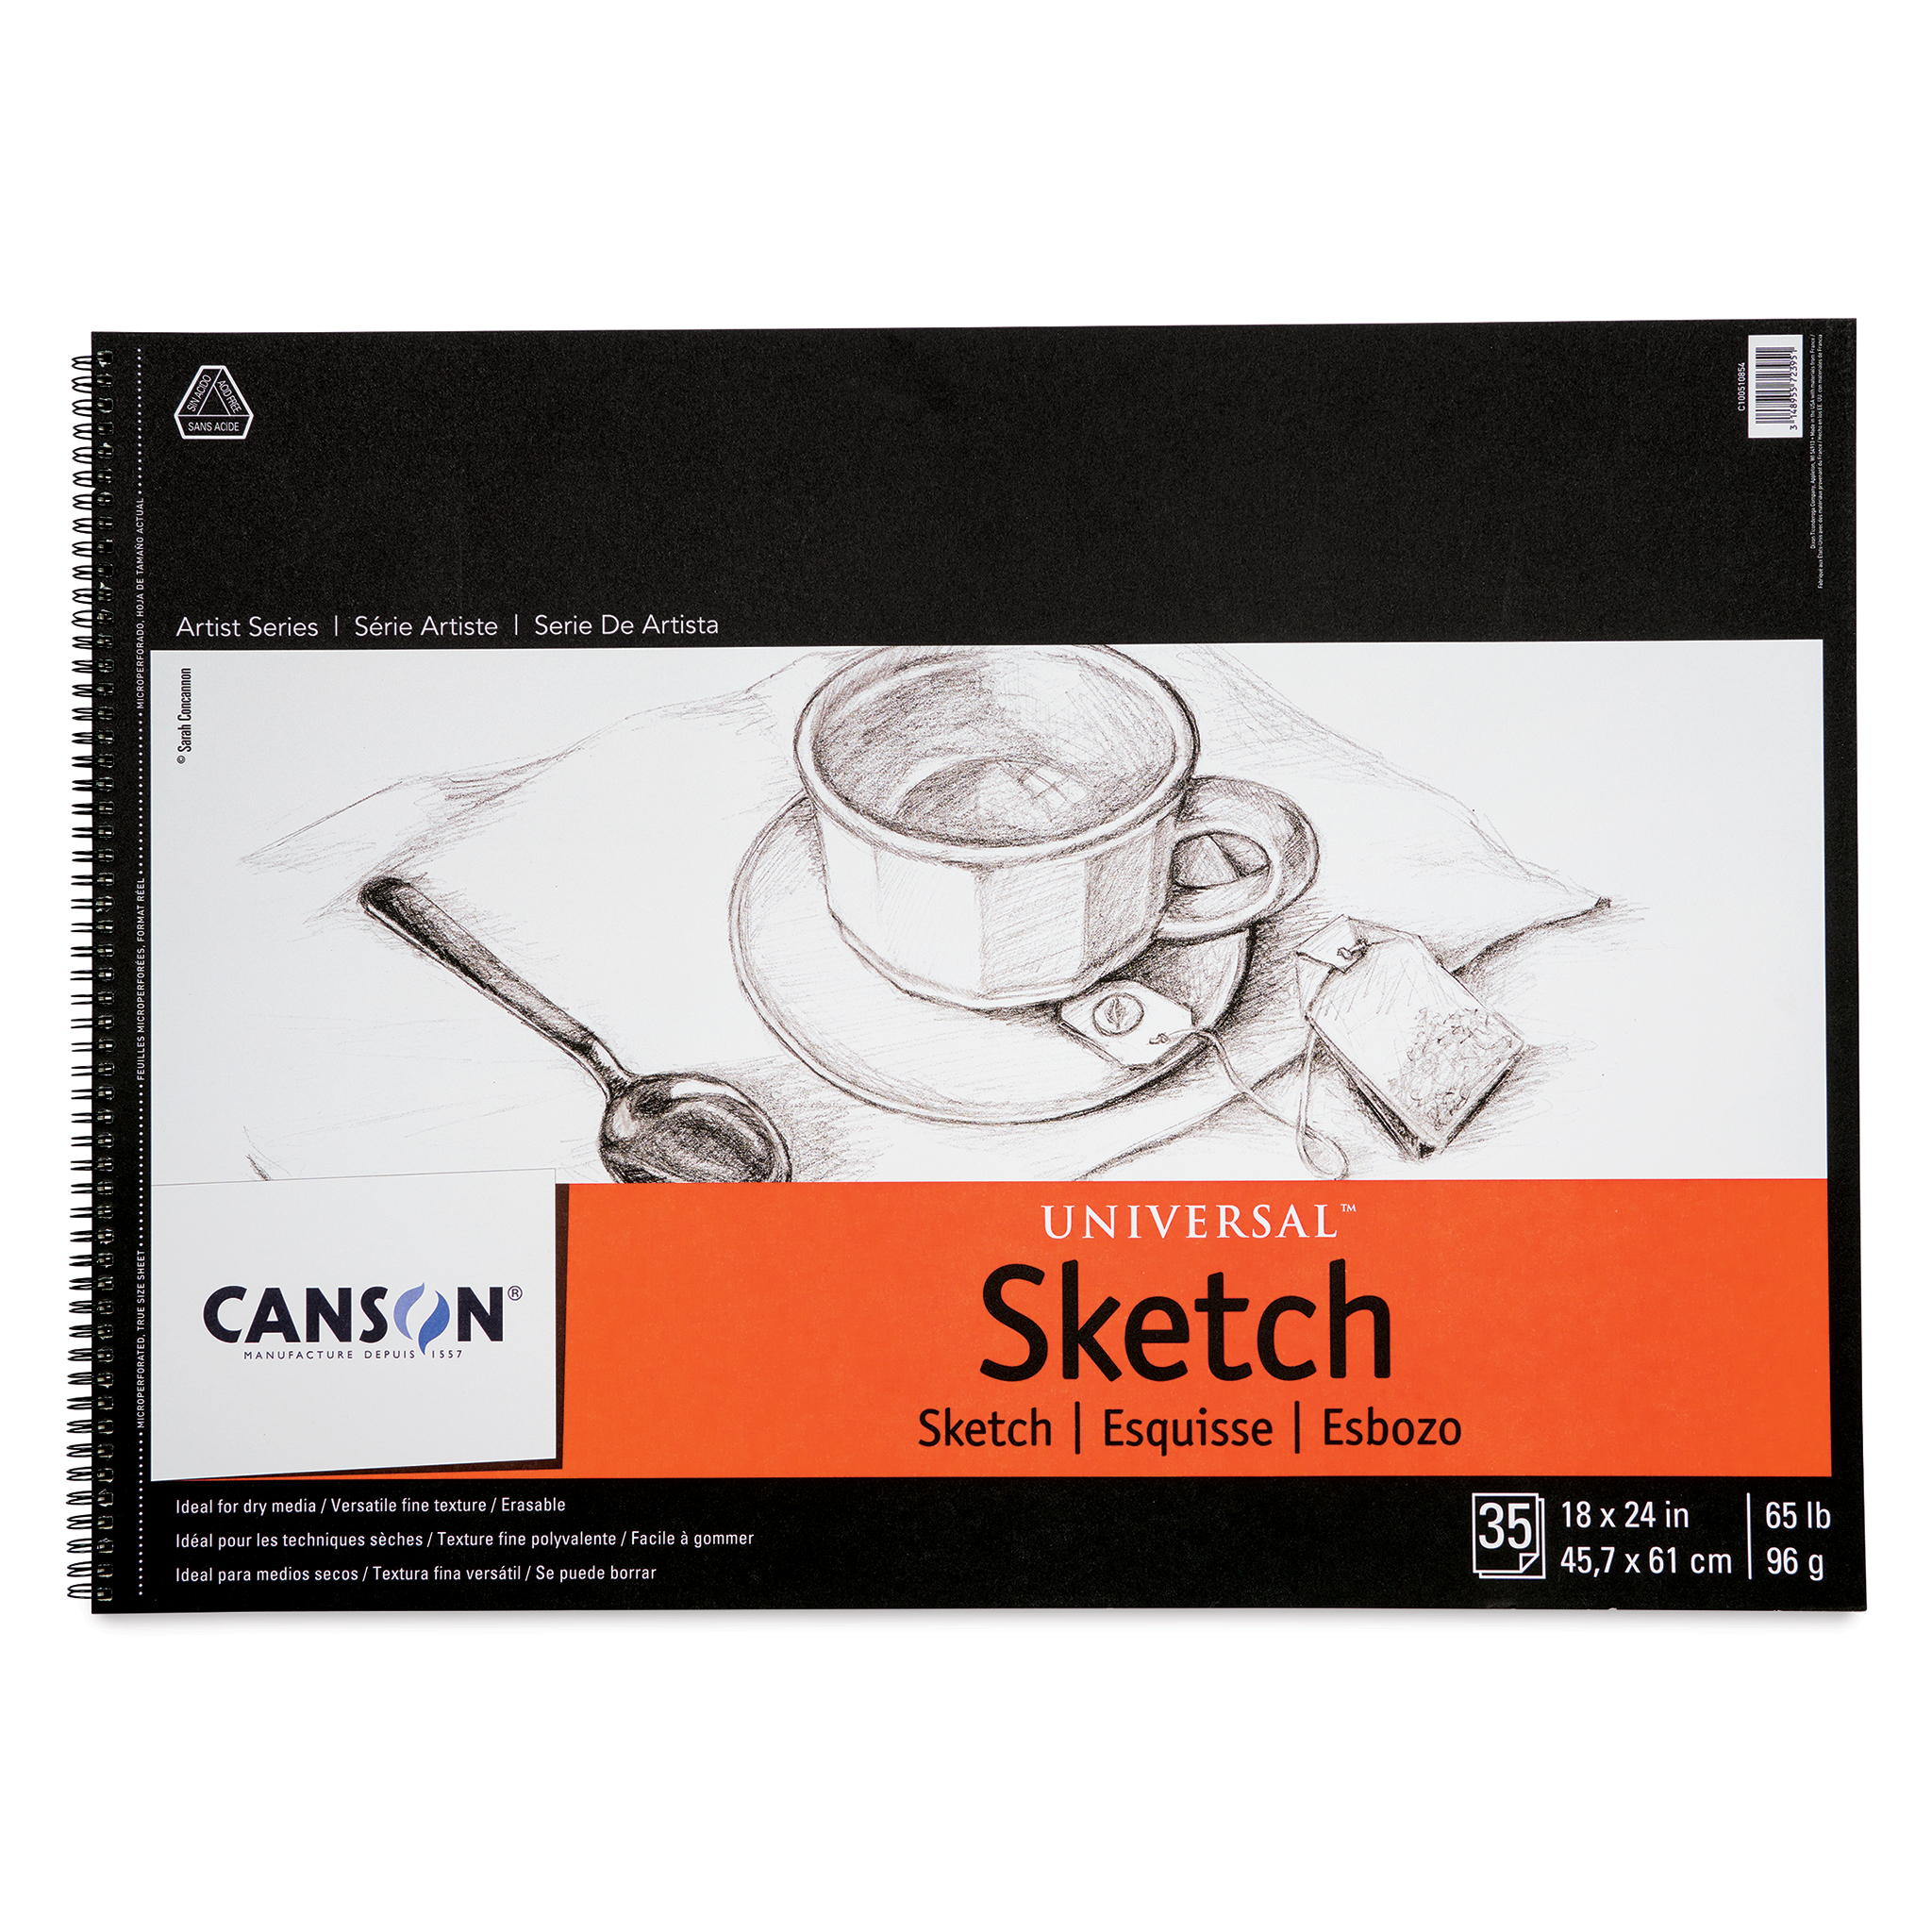 Canson Universal Sketch Pad - 12 x 9, Portrait, 100 Sheets